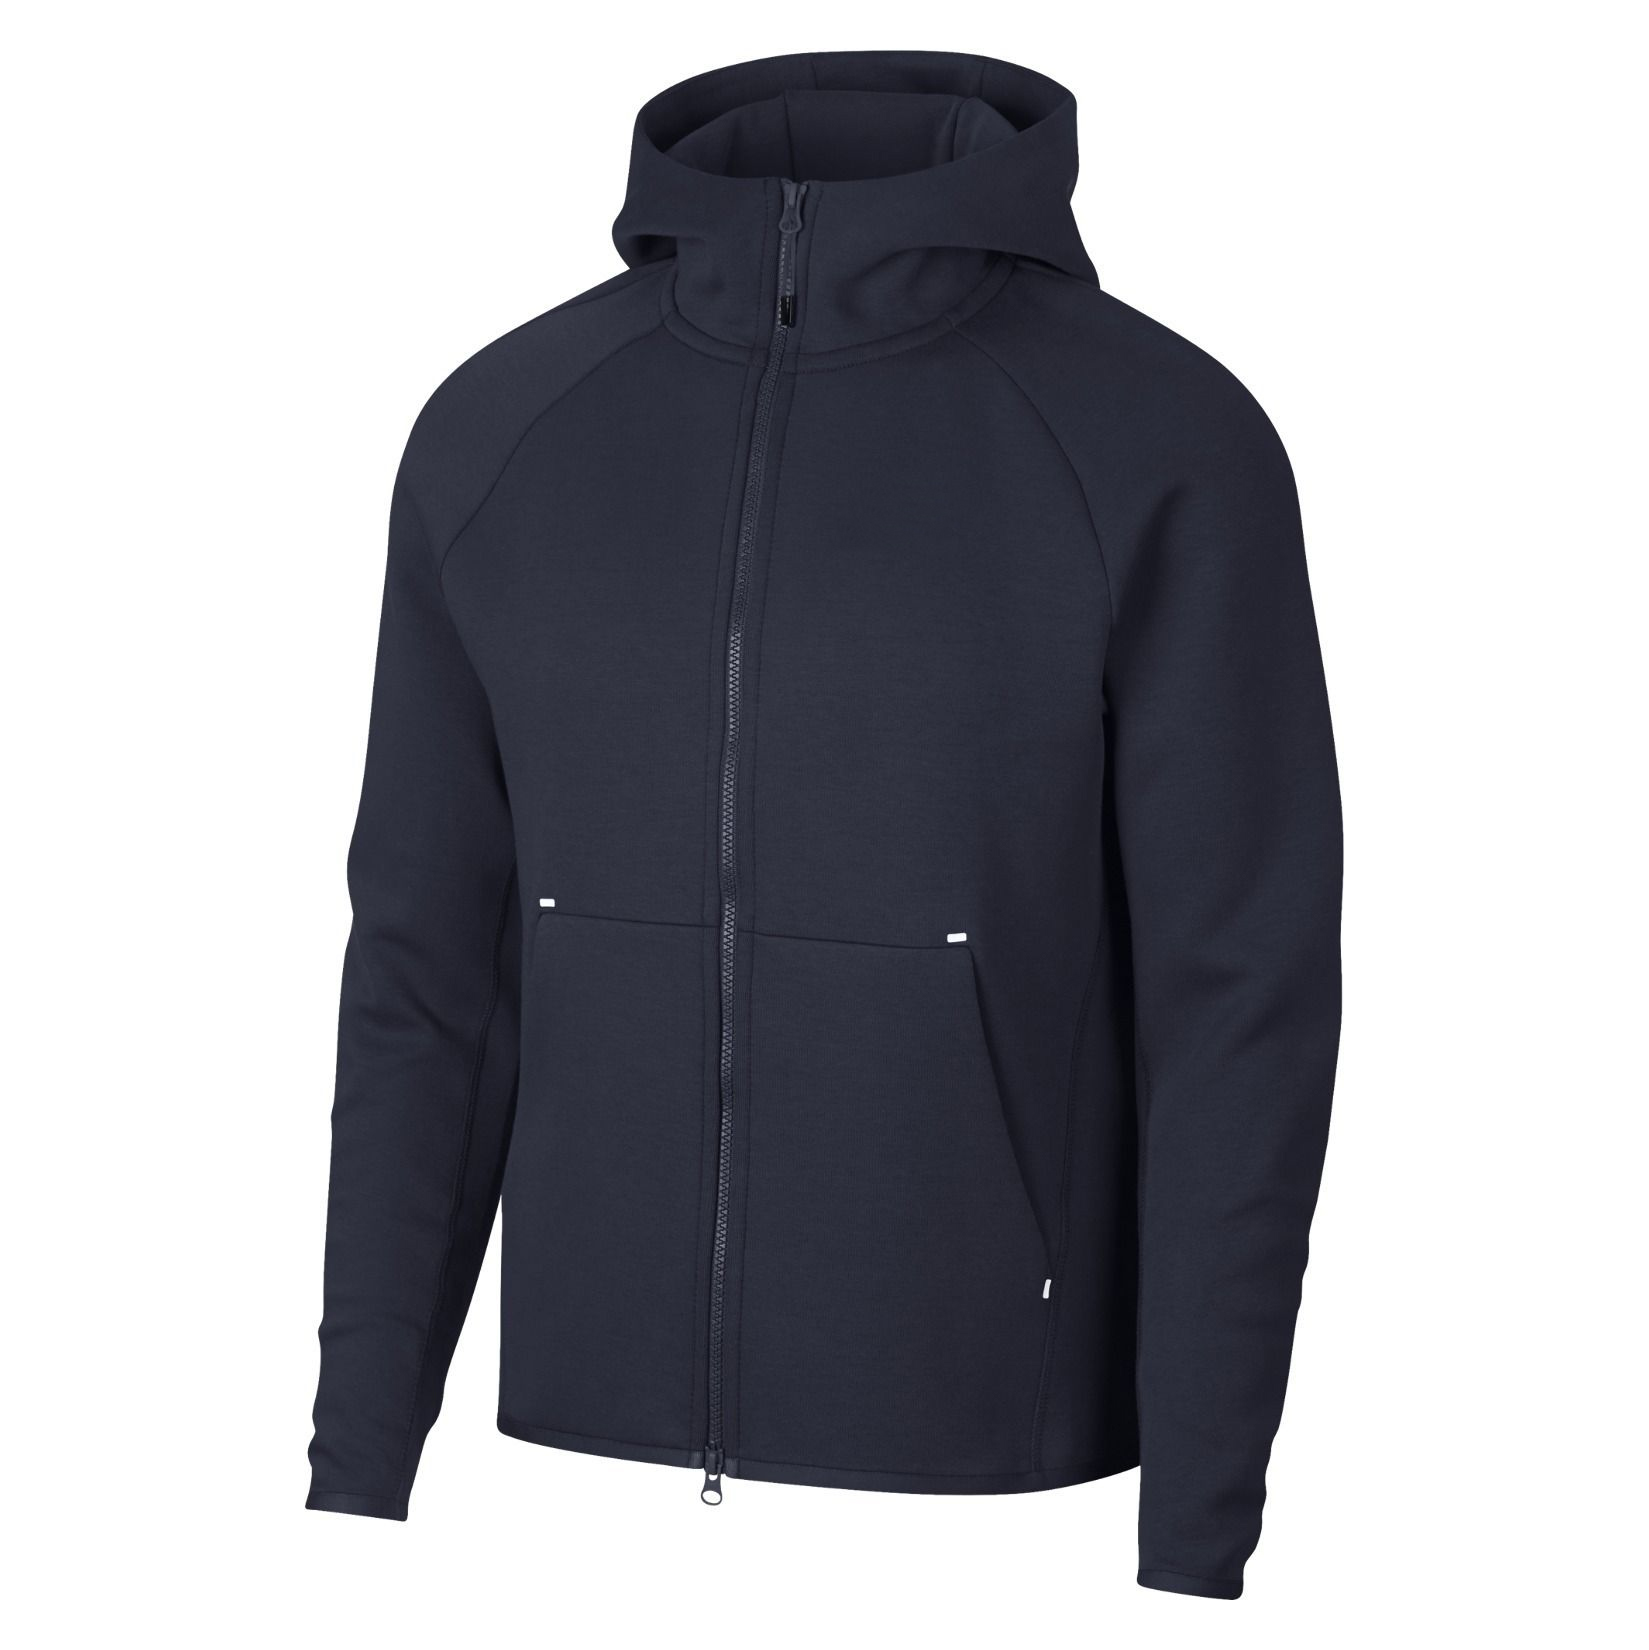 Royal BlueTechfleecesportwear original male Athletic Wear Bodybuilding Jacket ventilation leisure time Hooded loose coat